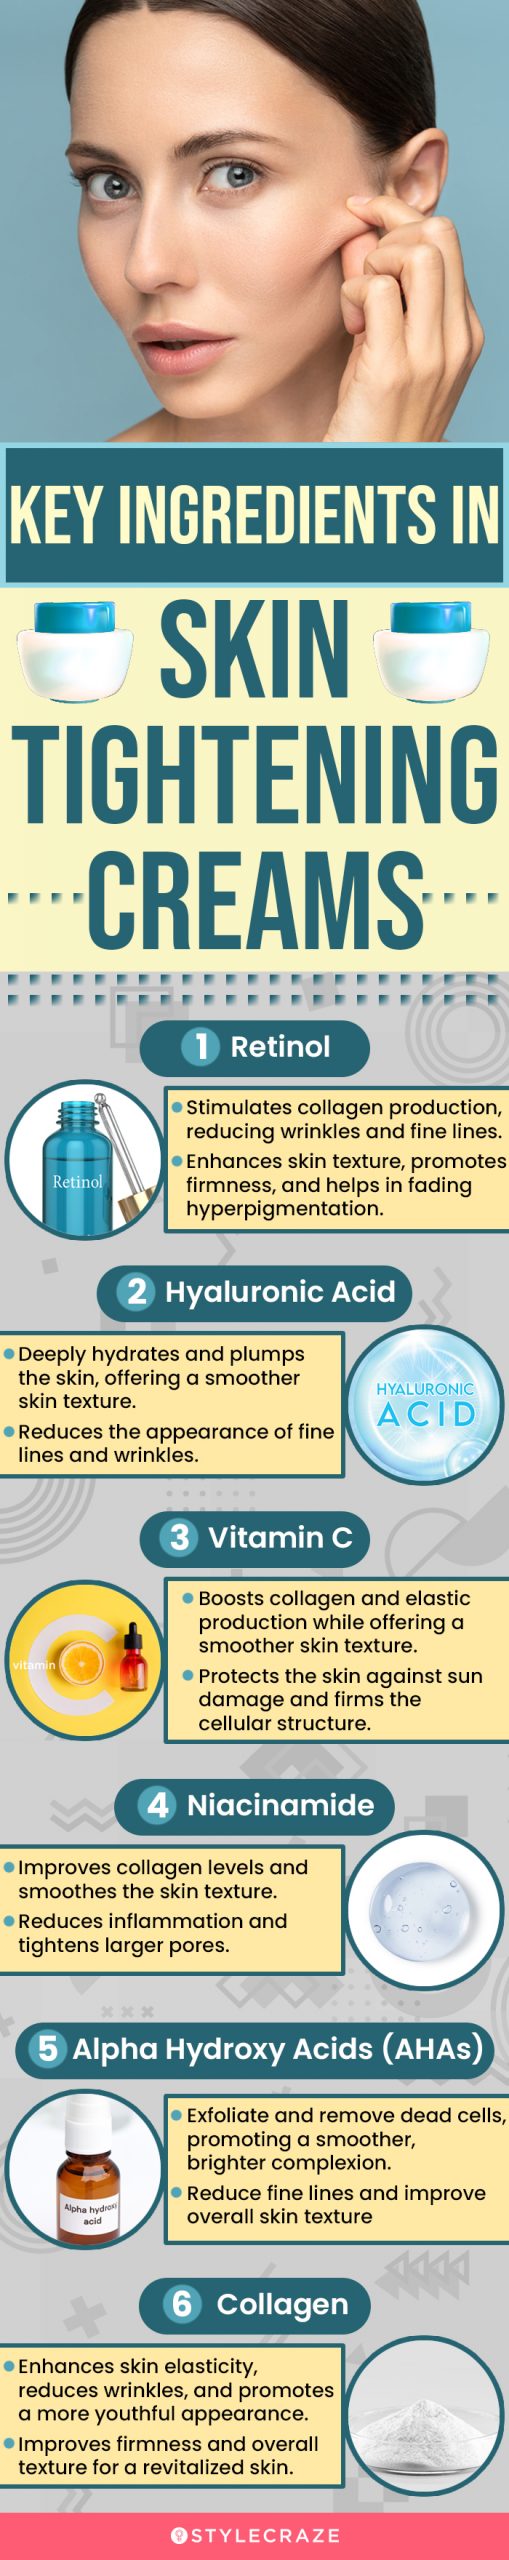 Key Ingredients In Skin Tightening Creams (infographic)